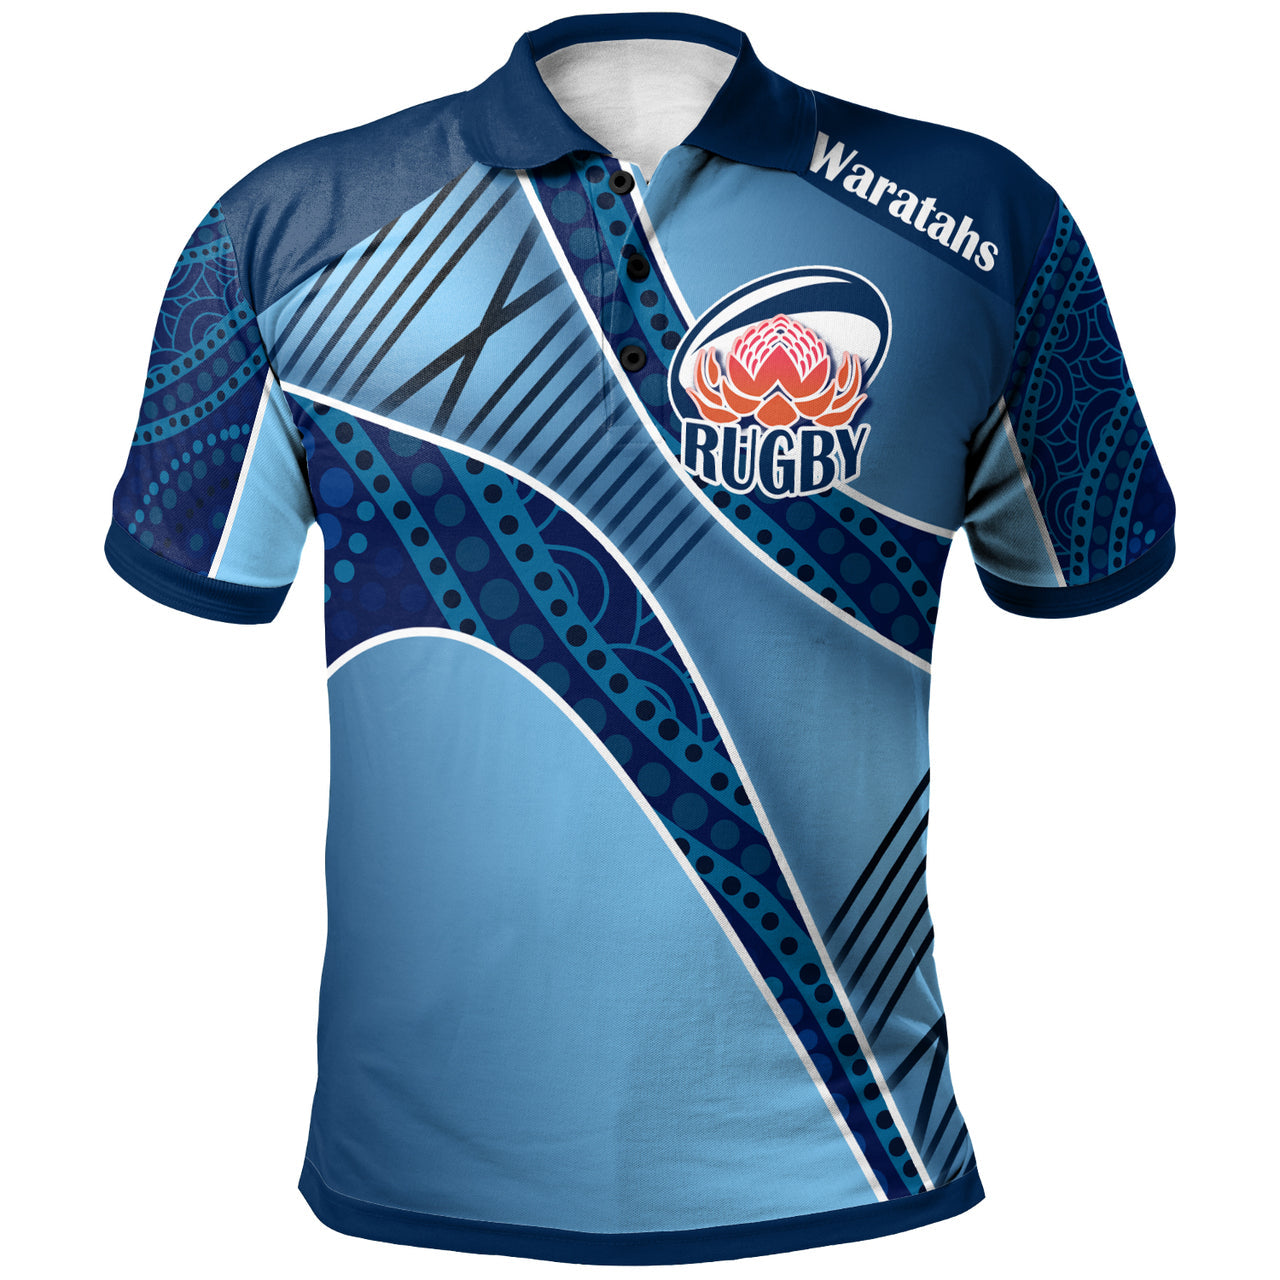 waratahs-rugby-polo-shirt-custom-rugby-ball-logo-polo-shirt